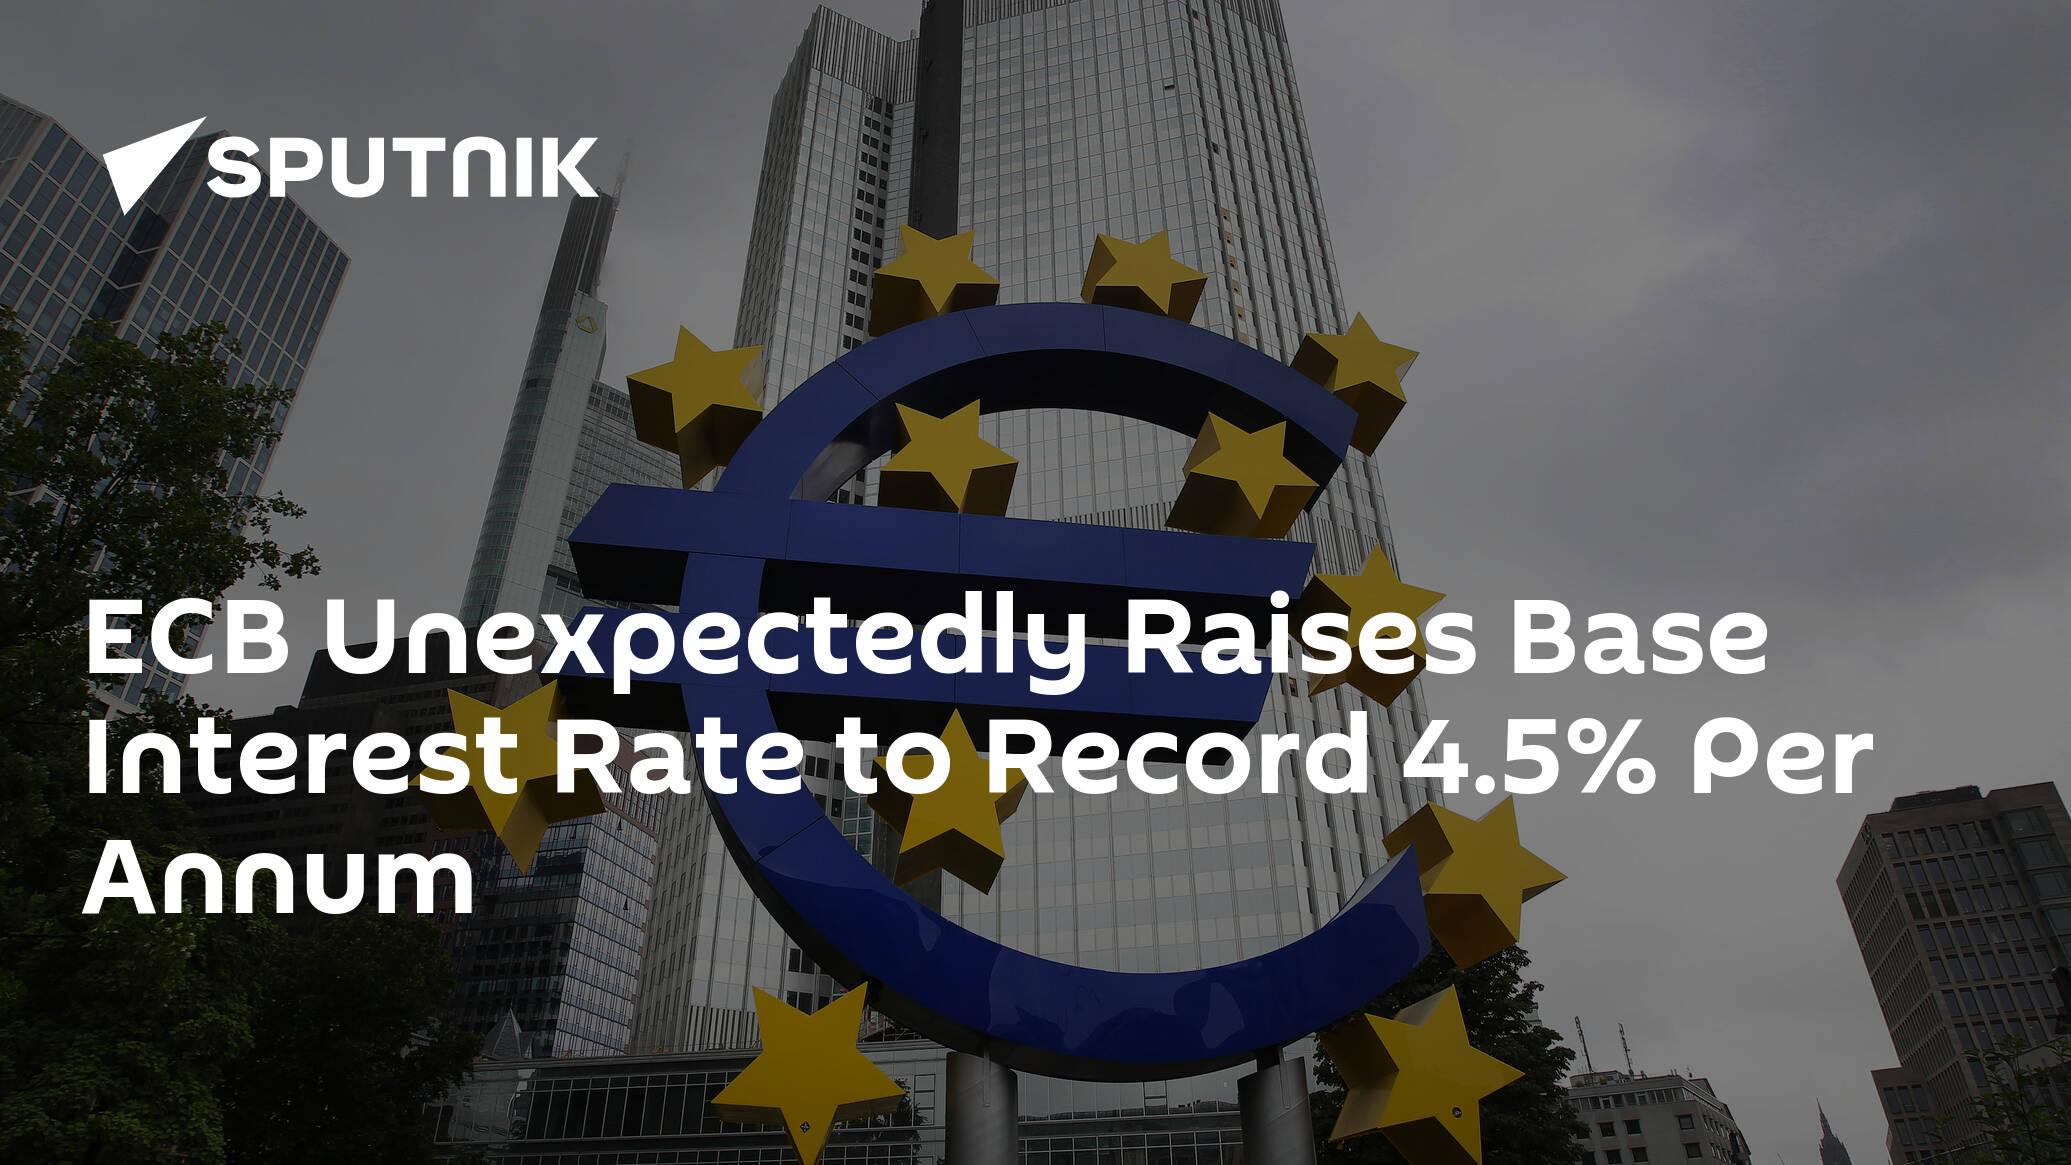 ECB Unexpectedly Raises Base Interest Rate to Record 4.5% Per Annum